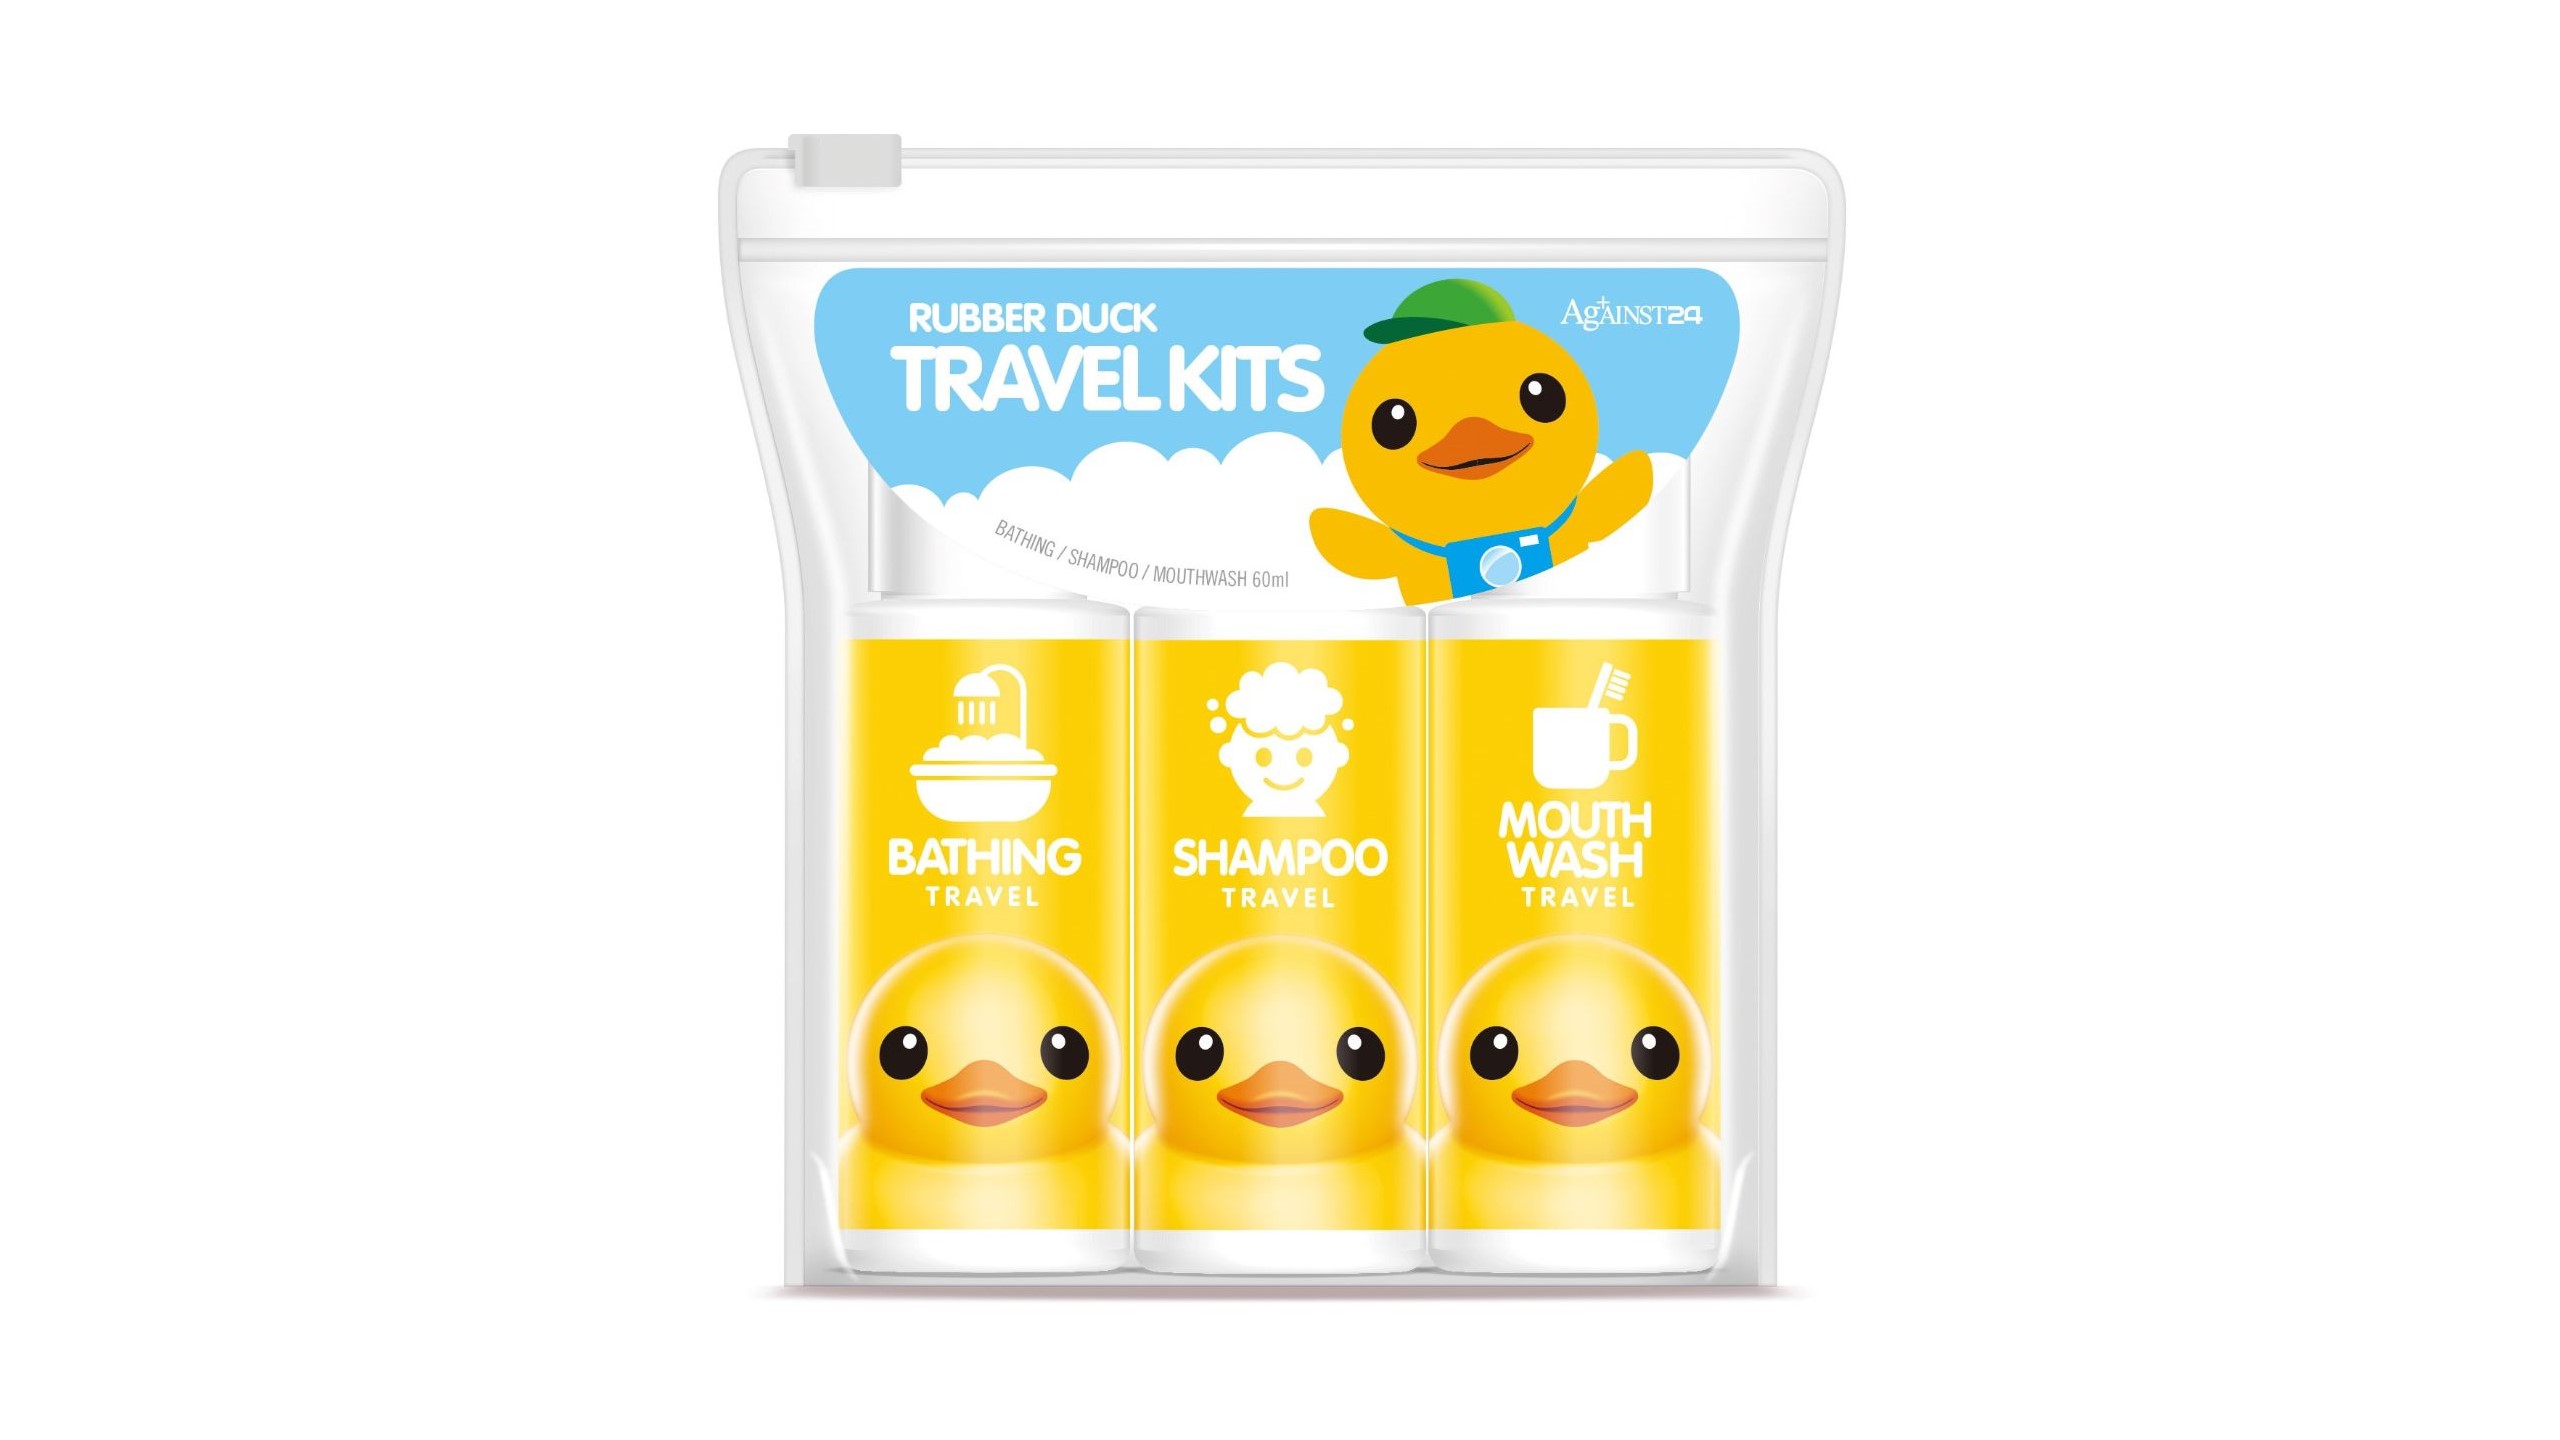 Against24 Rubber Duck Travel Kits 180ml